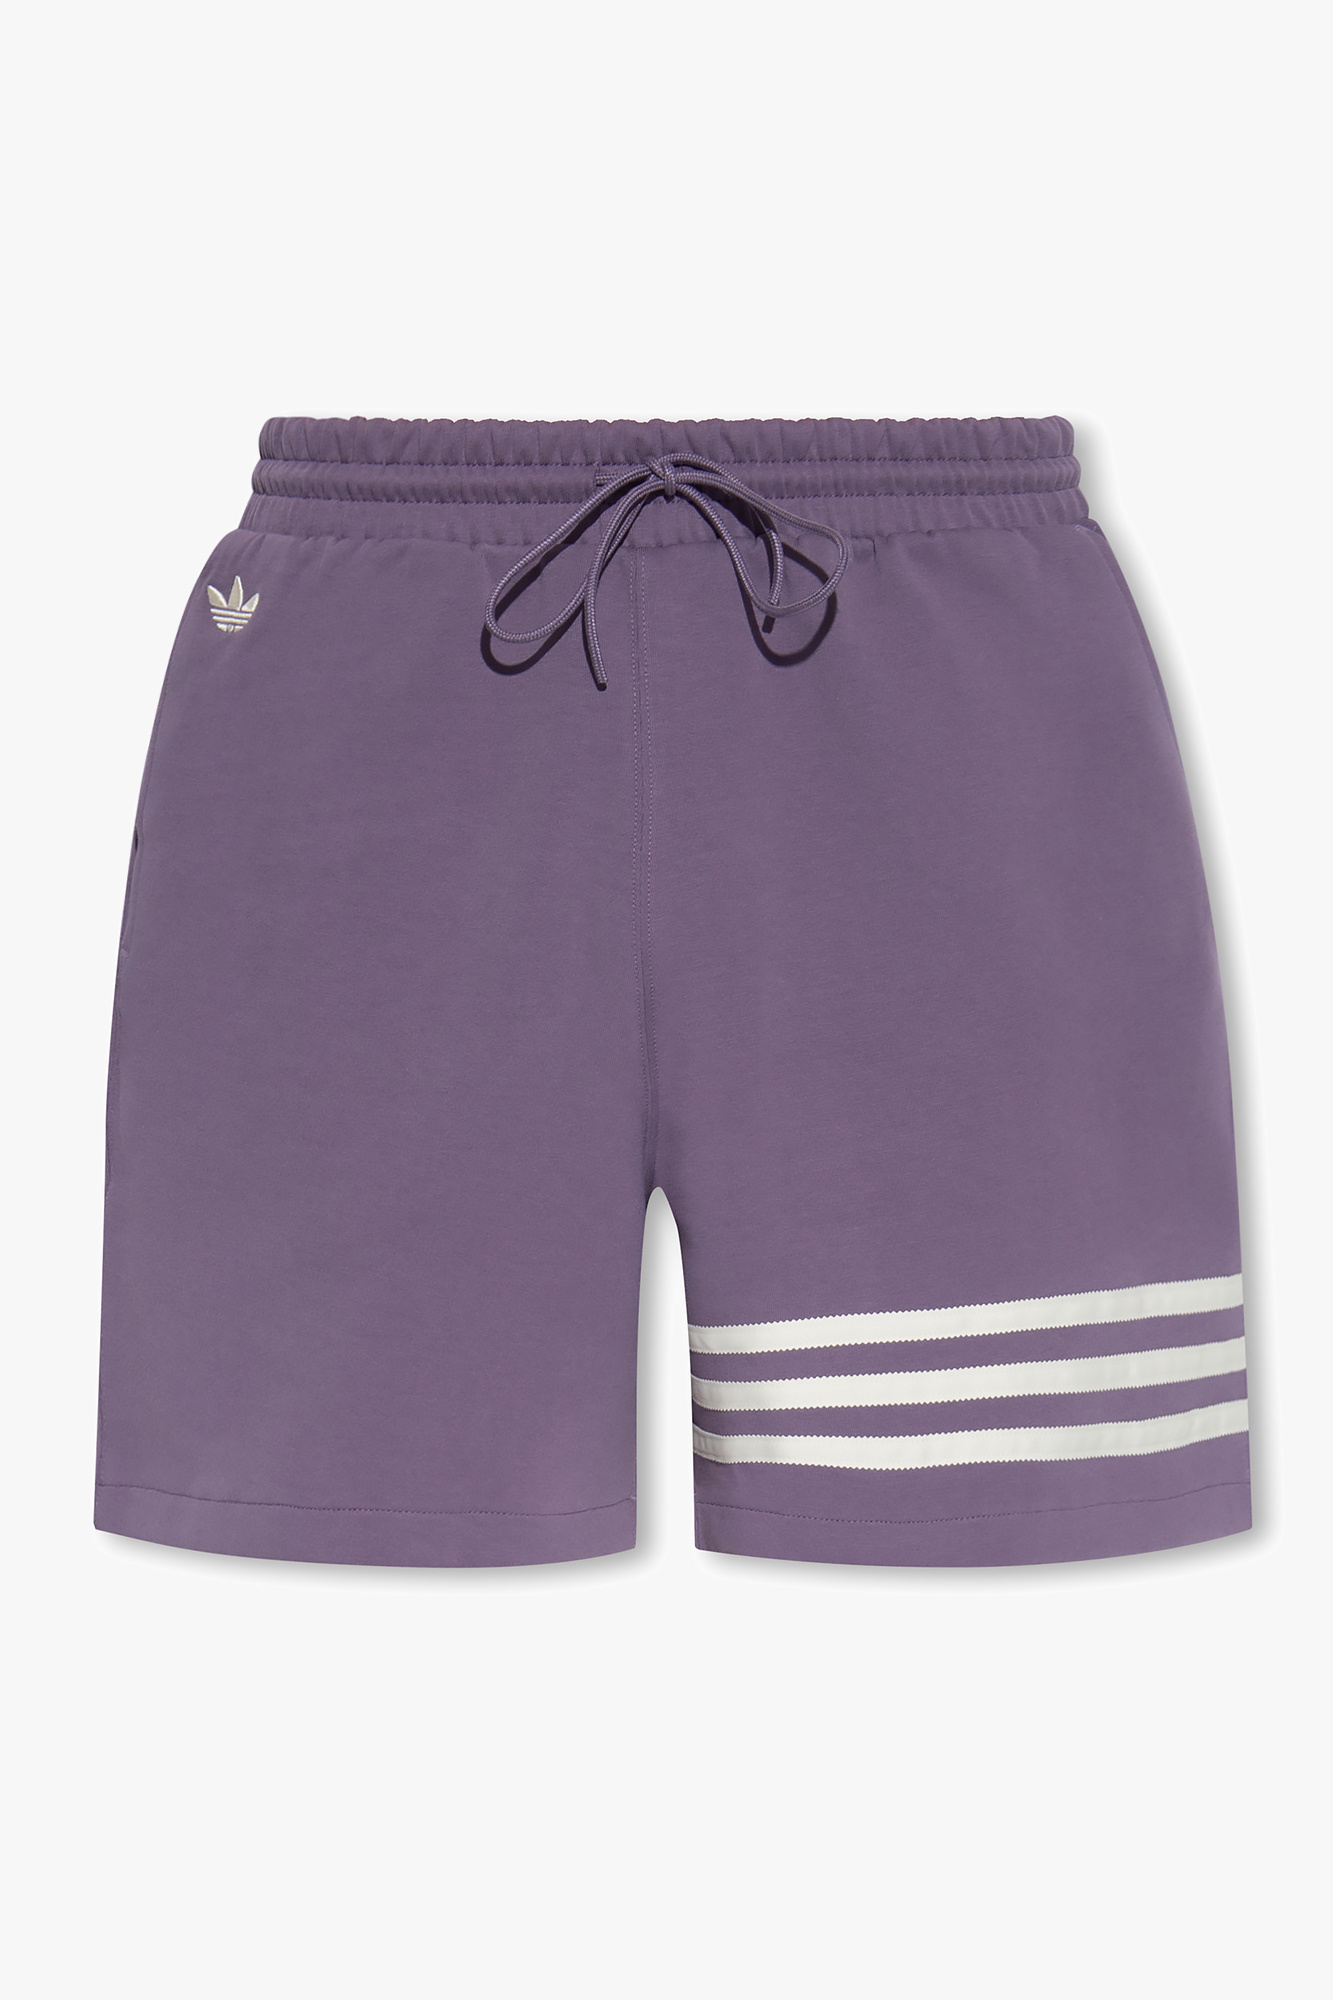 ADIDAS Originals Shorts with logo | Men's Clothing | Vitkac